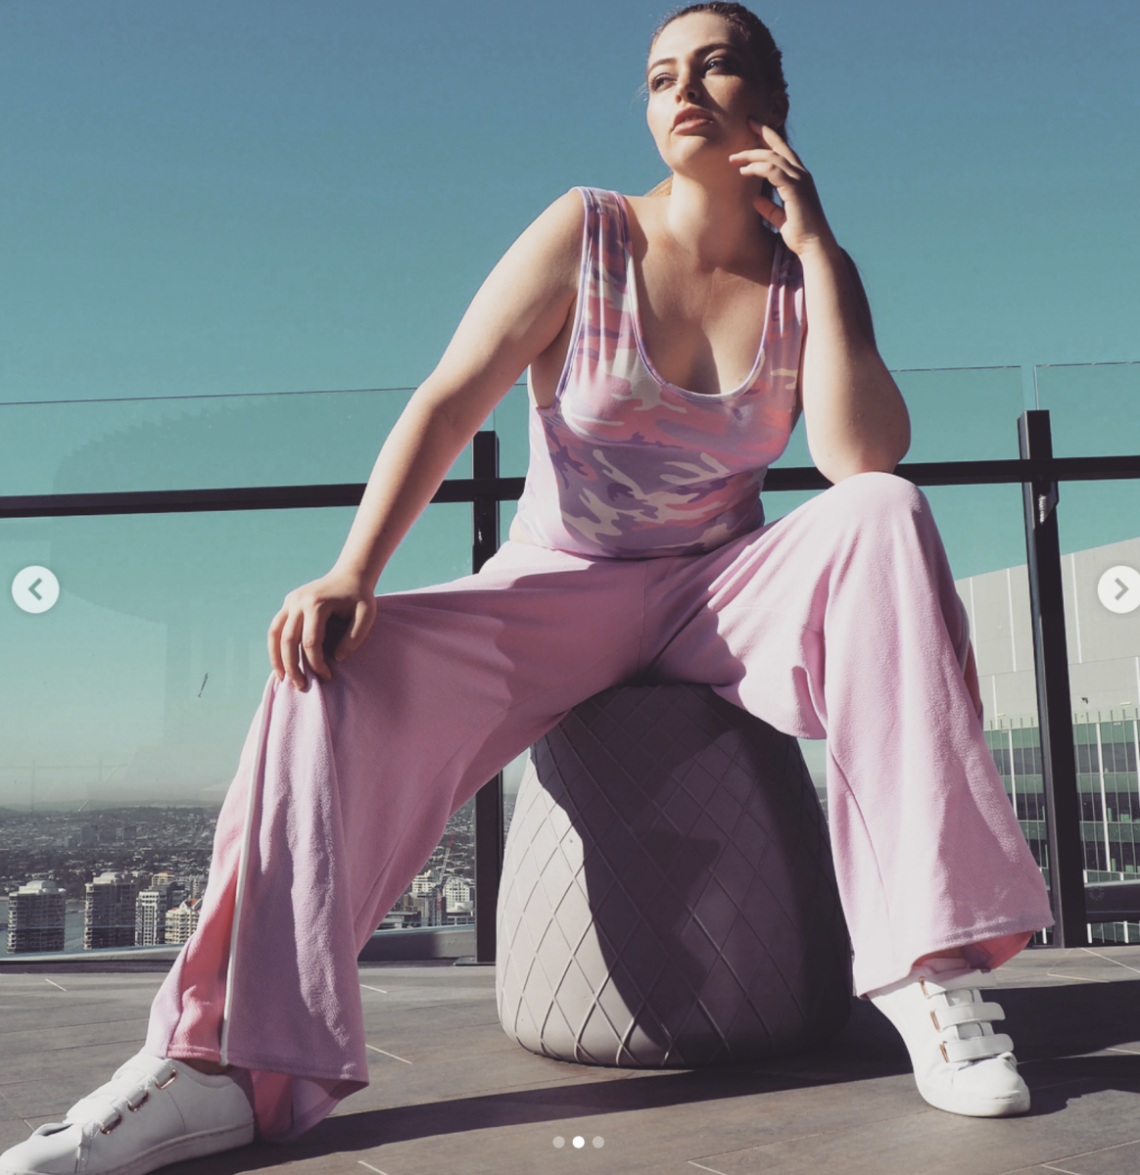 Balistarz-model-Jess-Earle-portrait-shoot-in-a-pink-casual-outfit.